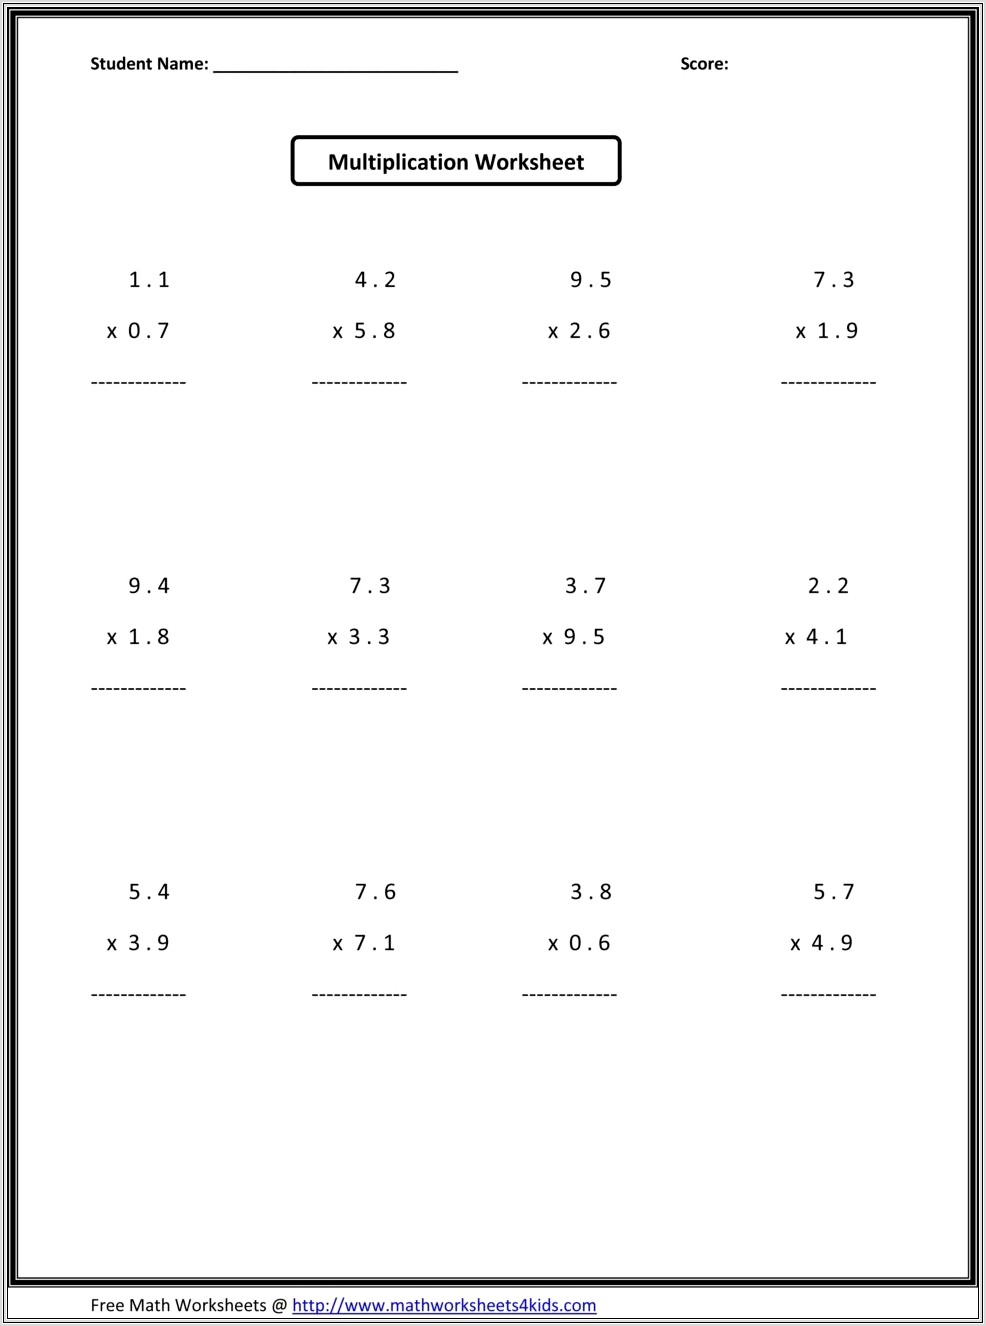 printable-math-worksheets-by-grade-level-worksheet-restiumani